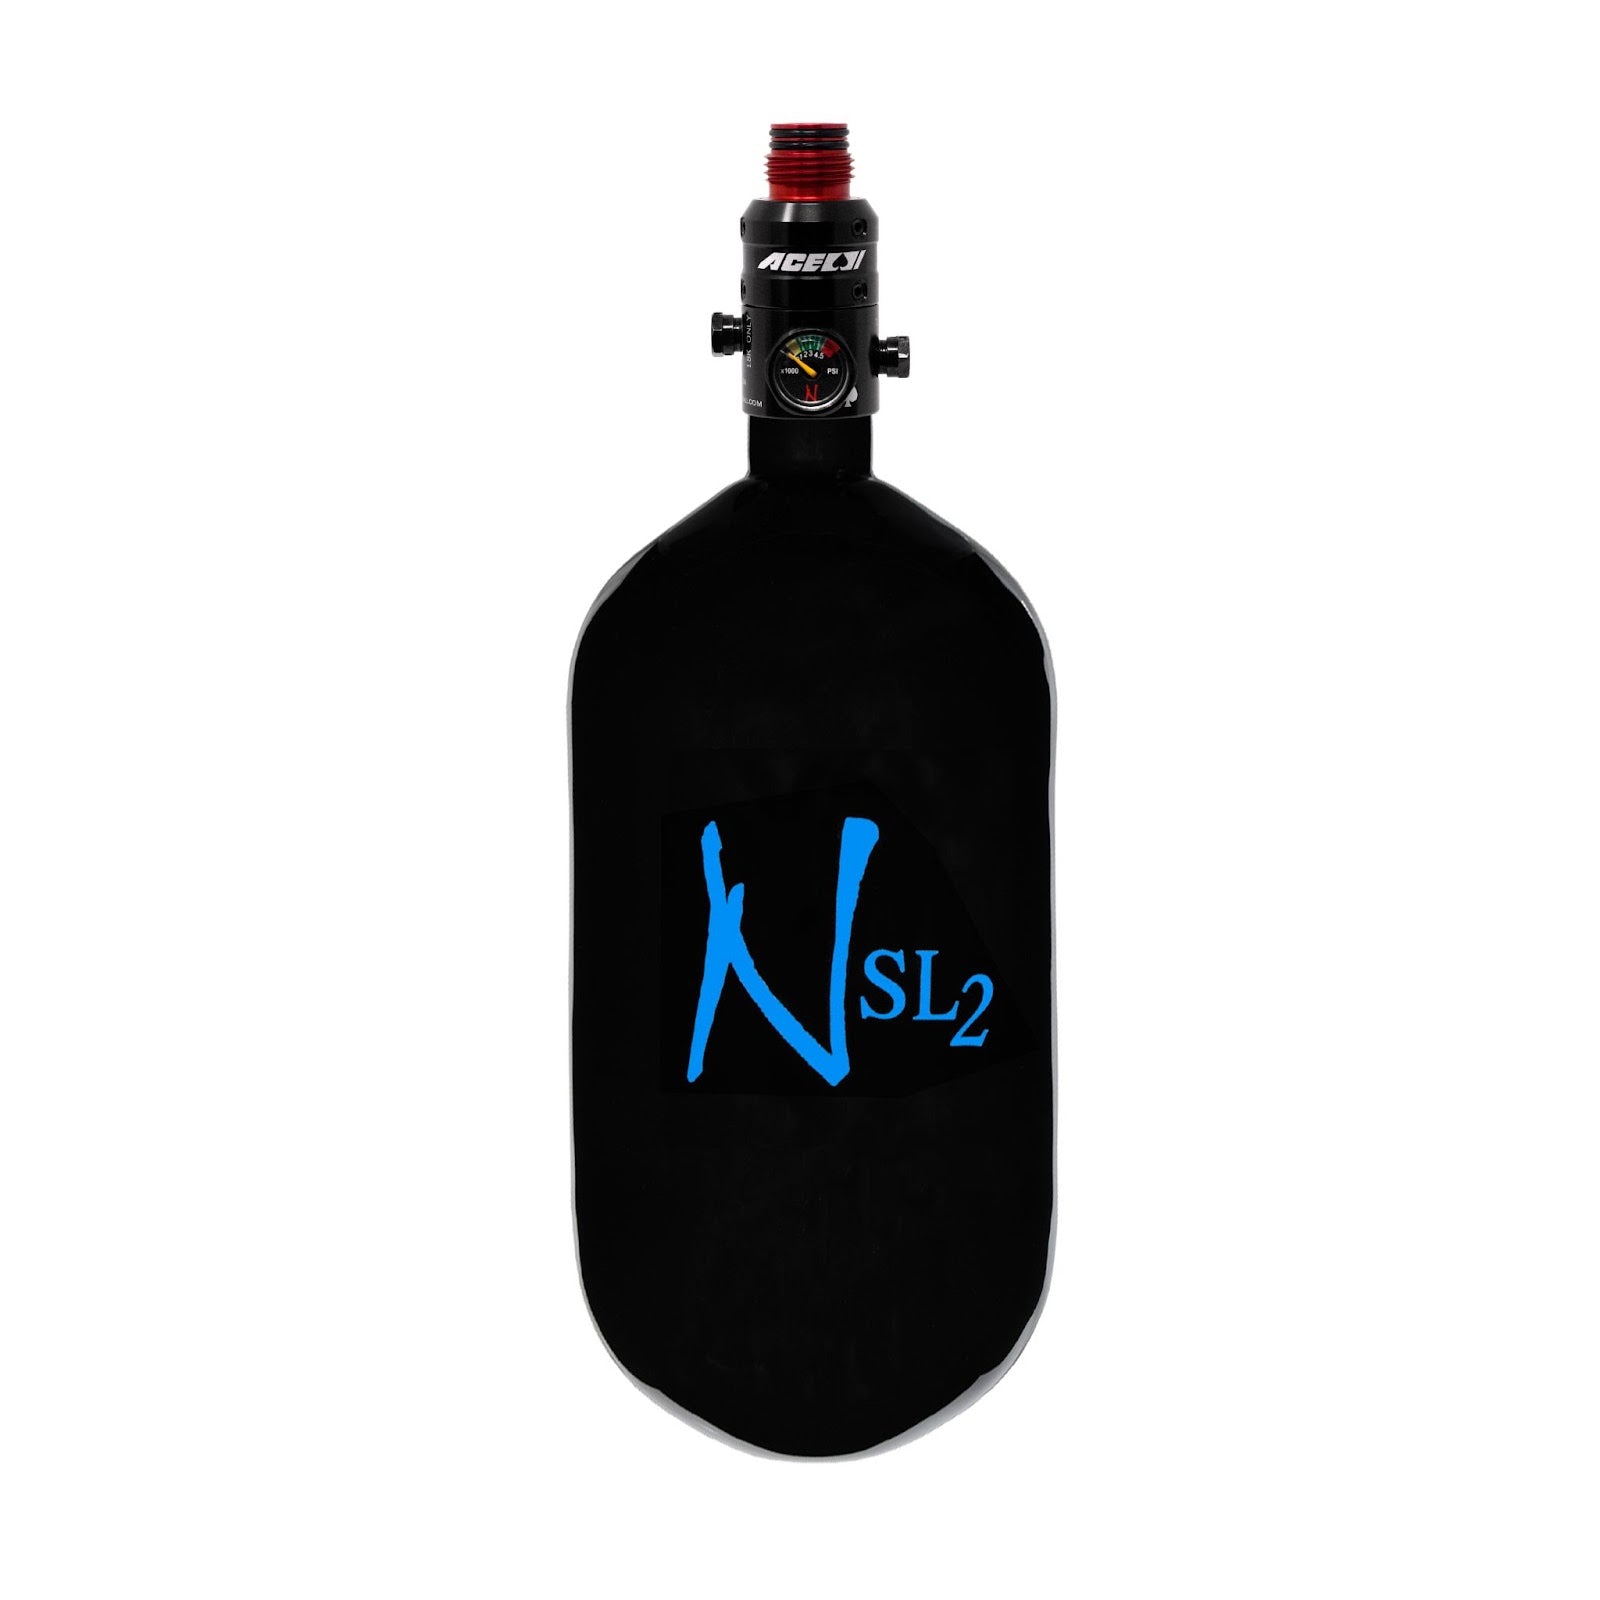 Ninja 77/4500 SL2 | BLACK SUPER LITE 2 77 BLUE LOGO | Carbon Fiber Paintball Tank